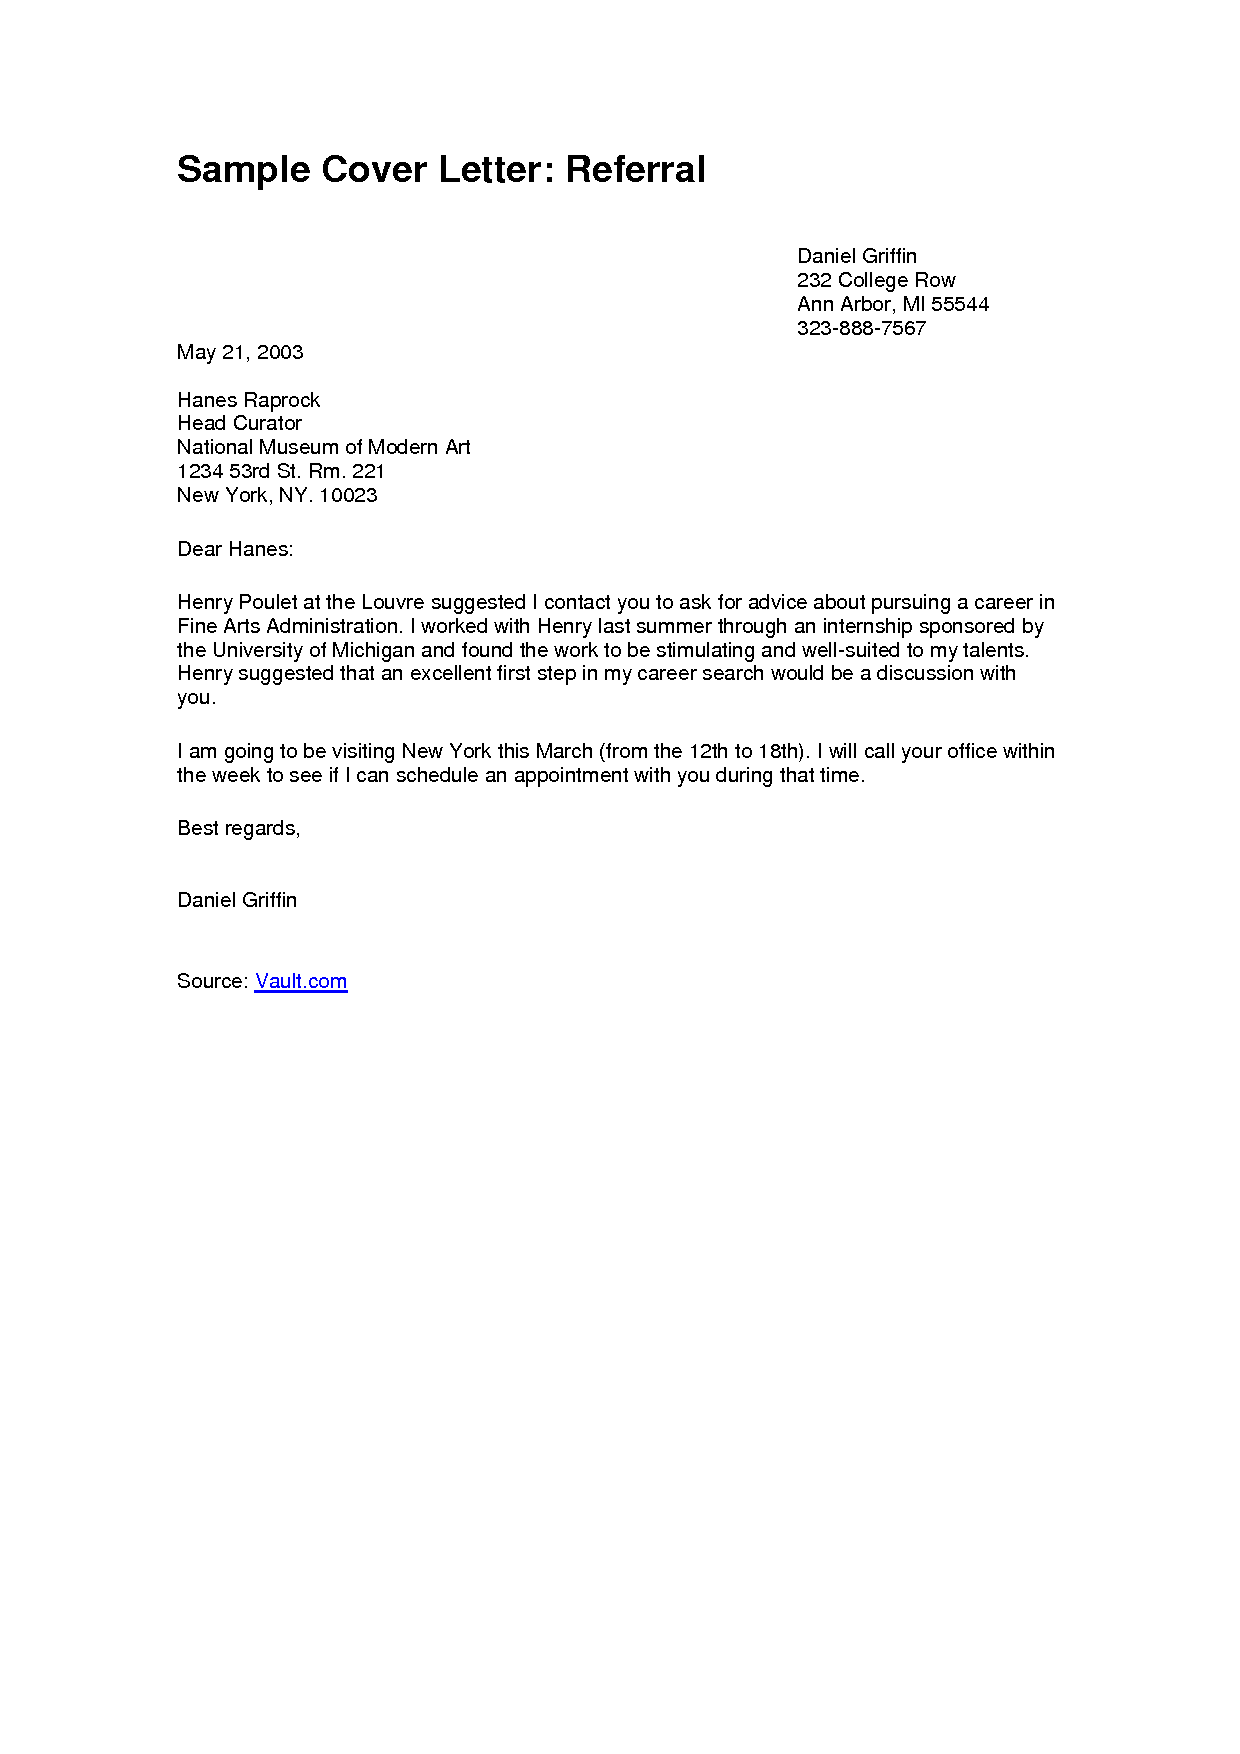 Museum resume cover letter